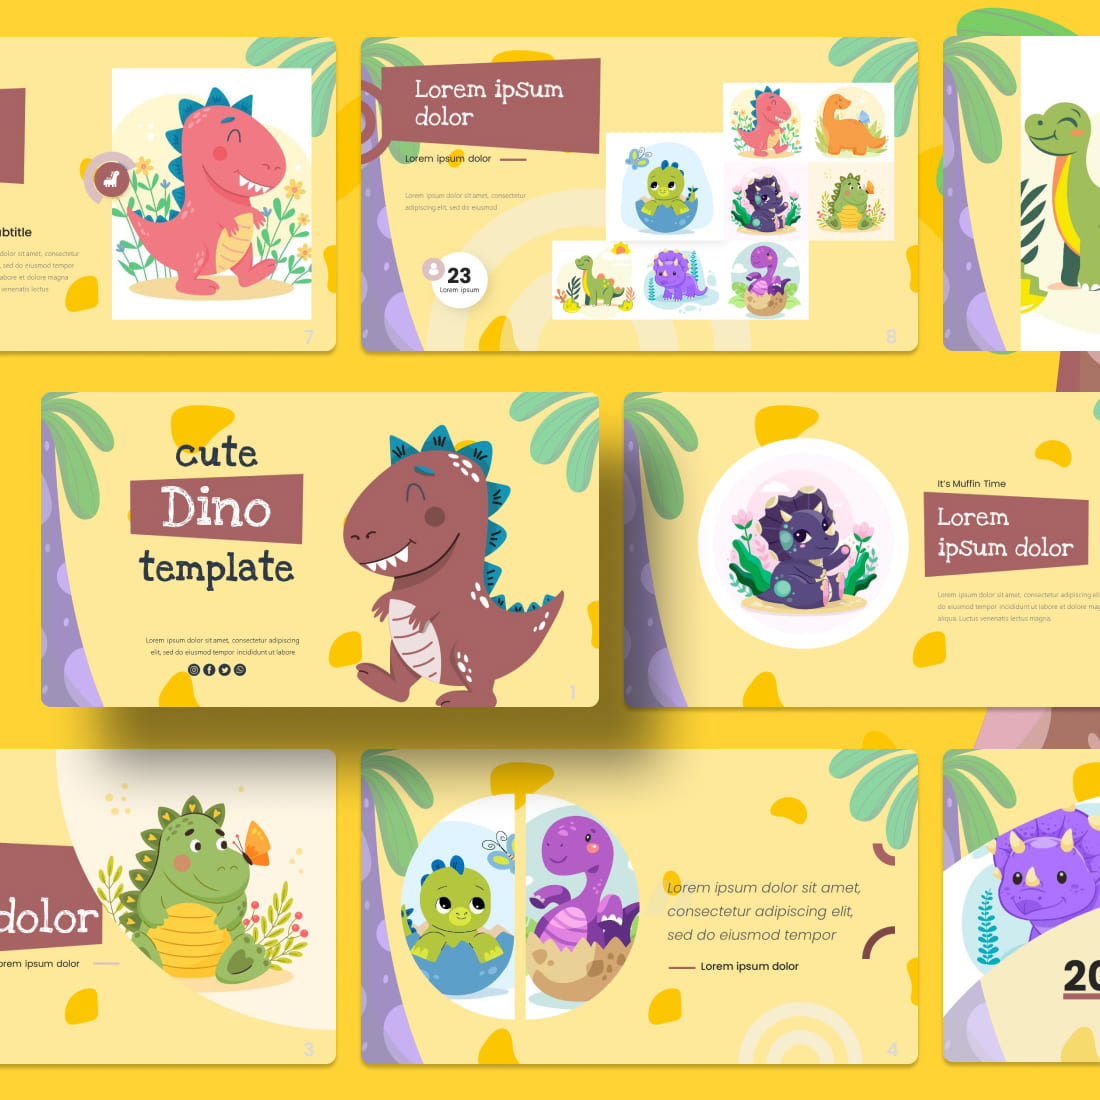 Cute Dino Presentation Template cover.